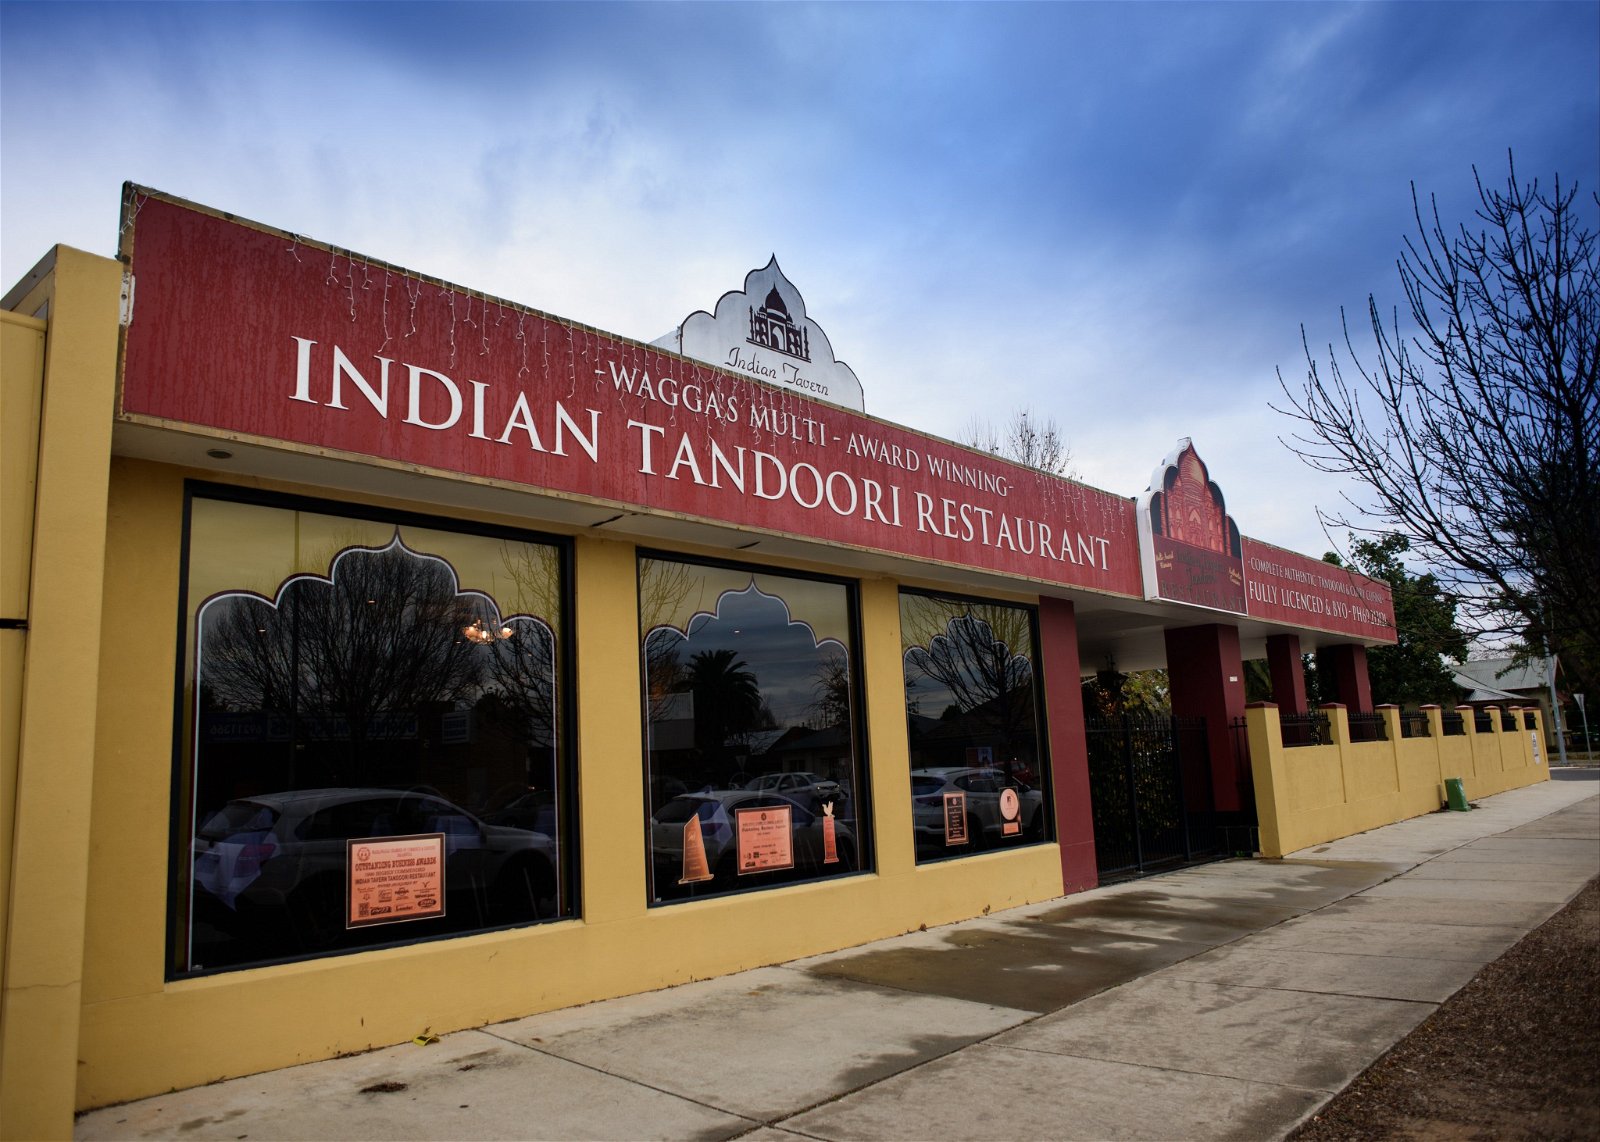 Indian Tavern Tandoori - Food Delivery Shop